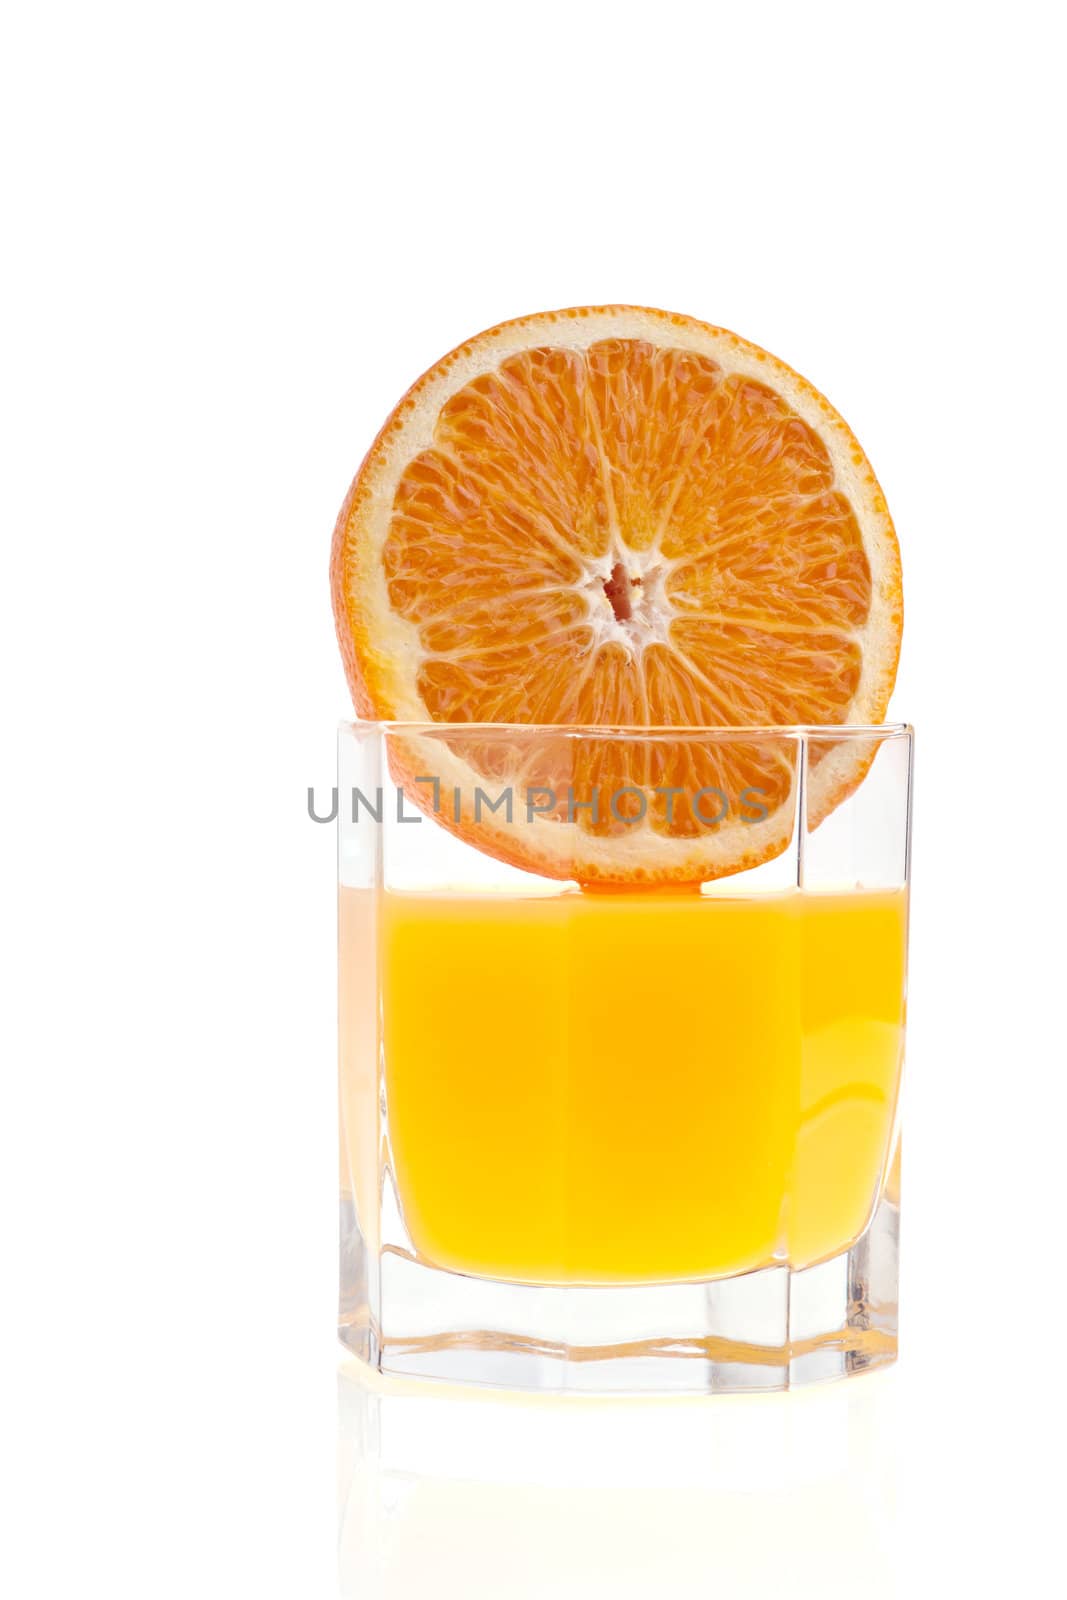 Orange and juice by Marcus